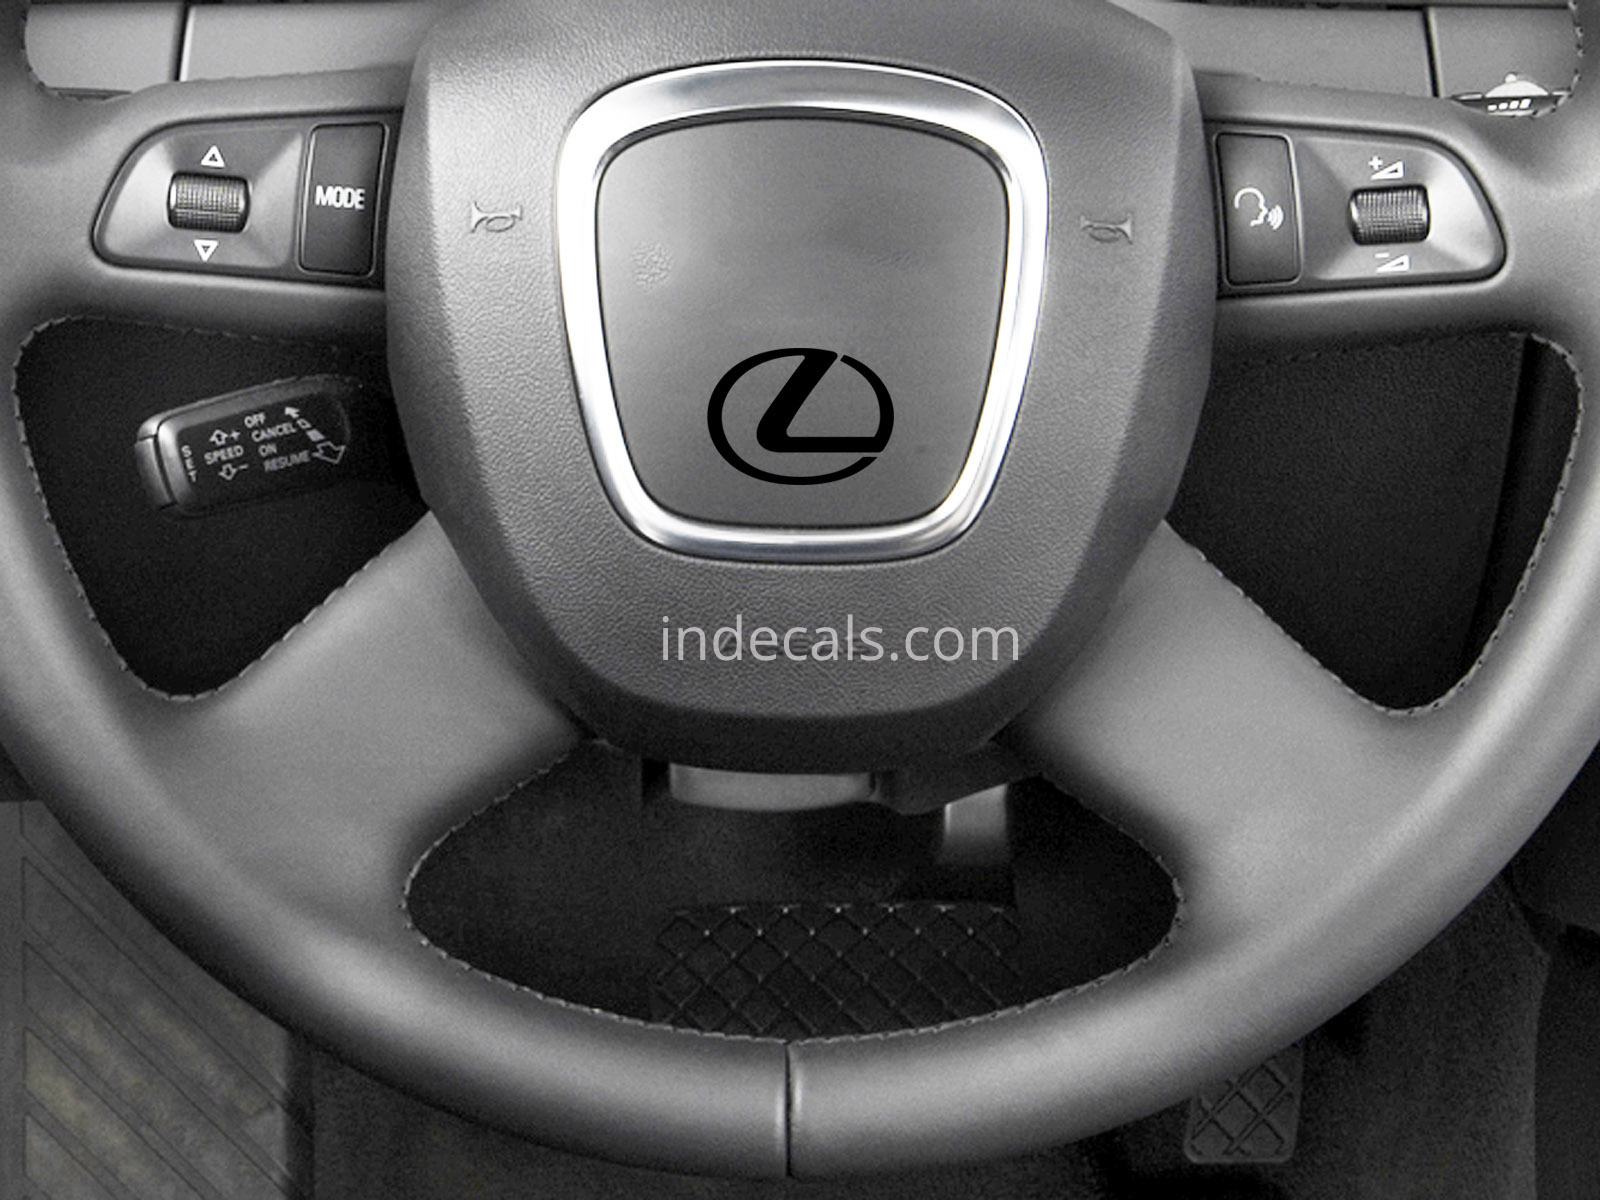 3 x Lexus Stickers for Steering Wheel - Black